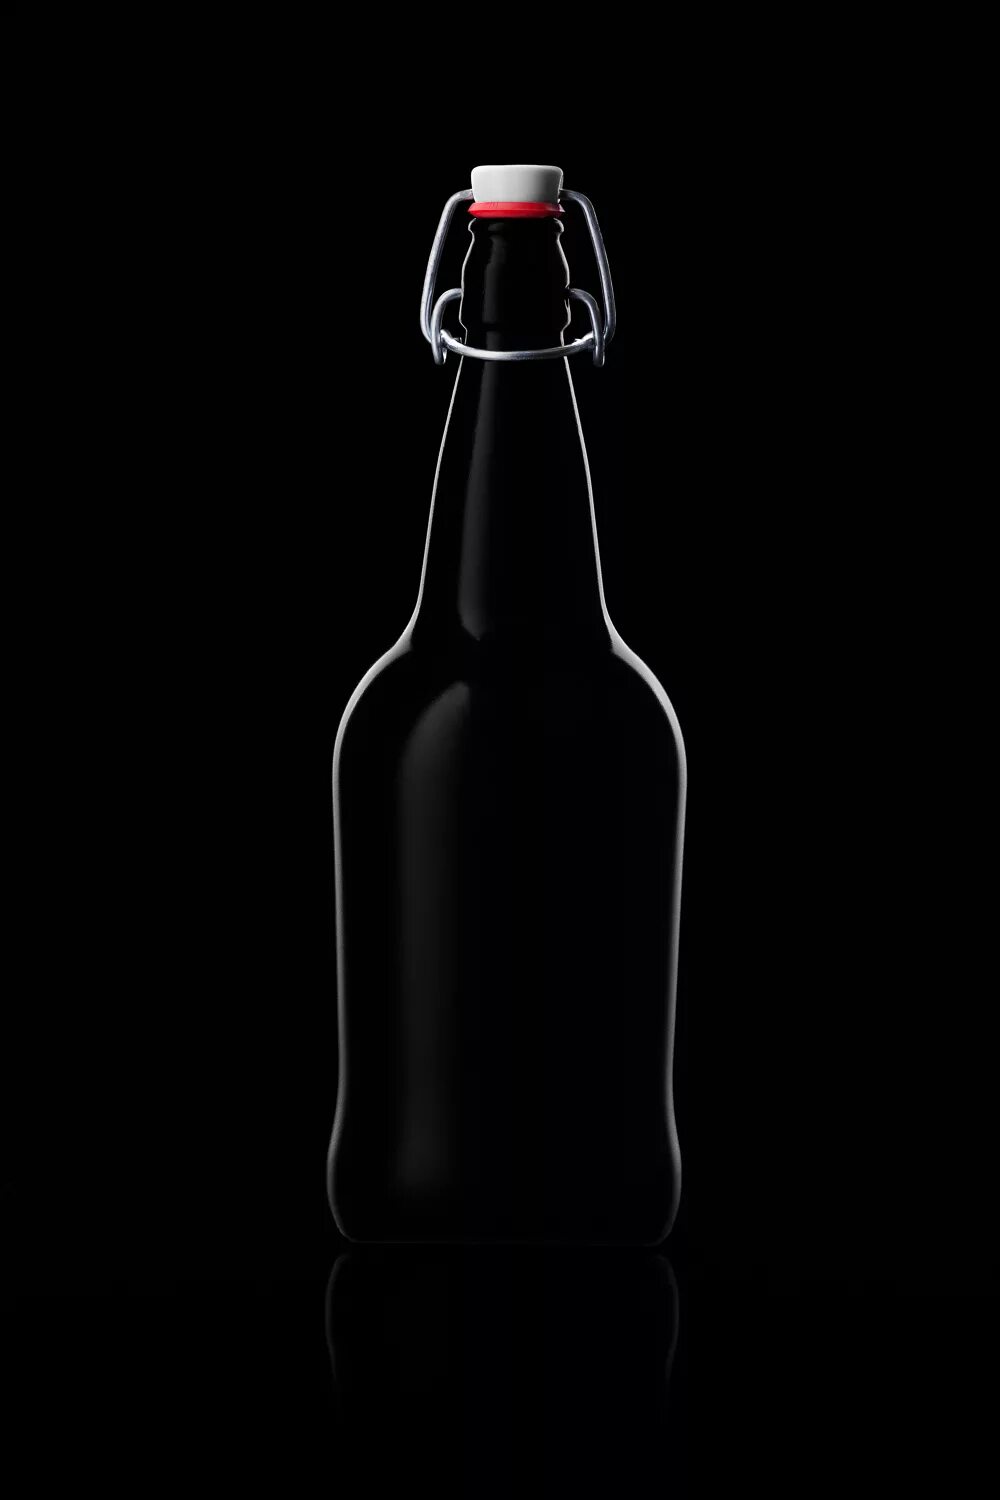 Бутылка фон. Бутылка пива на темном фоне. Бутылка на темном фоне. Бутылка пива на черном фоне. Стеклянная бутылка на черном фоне.